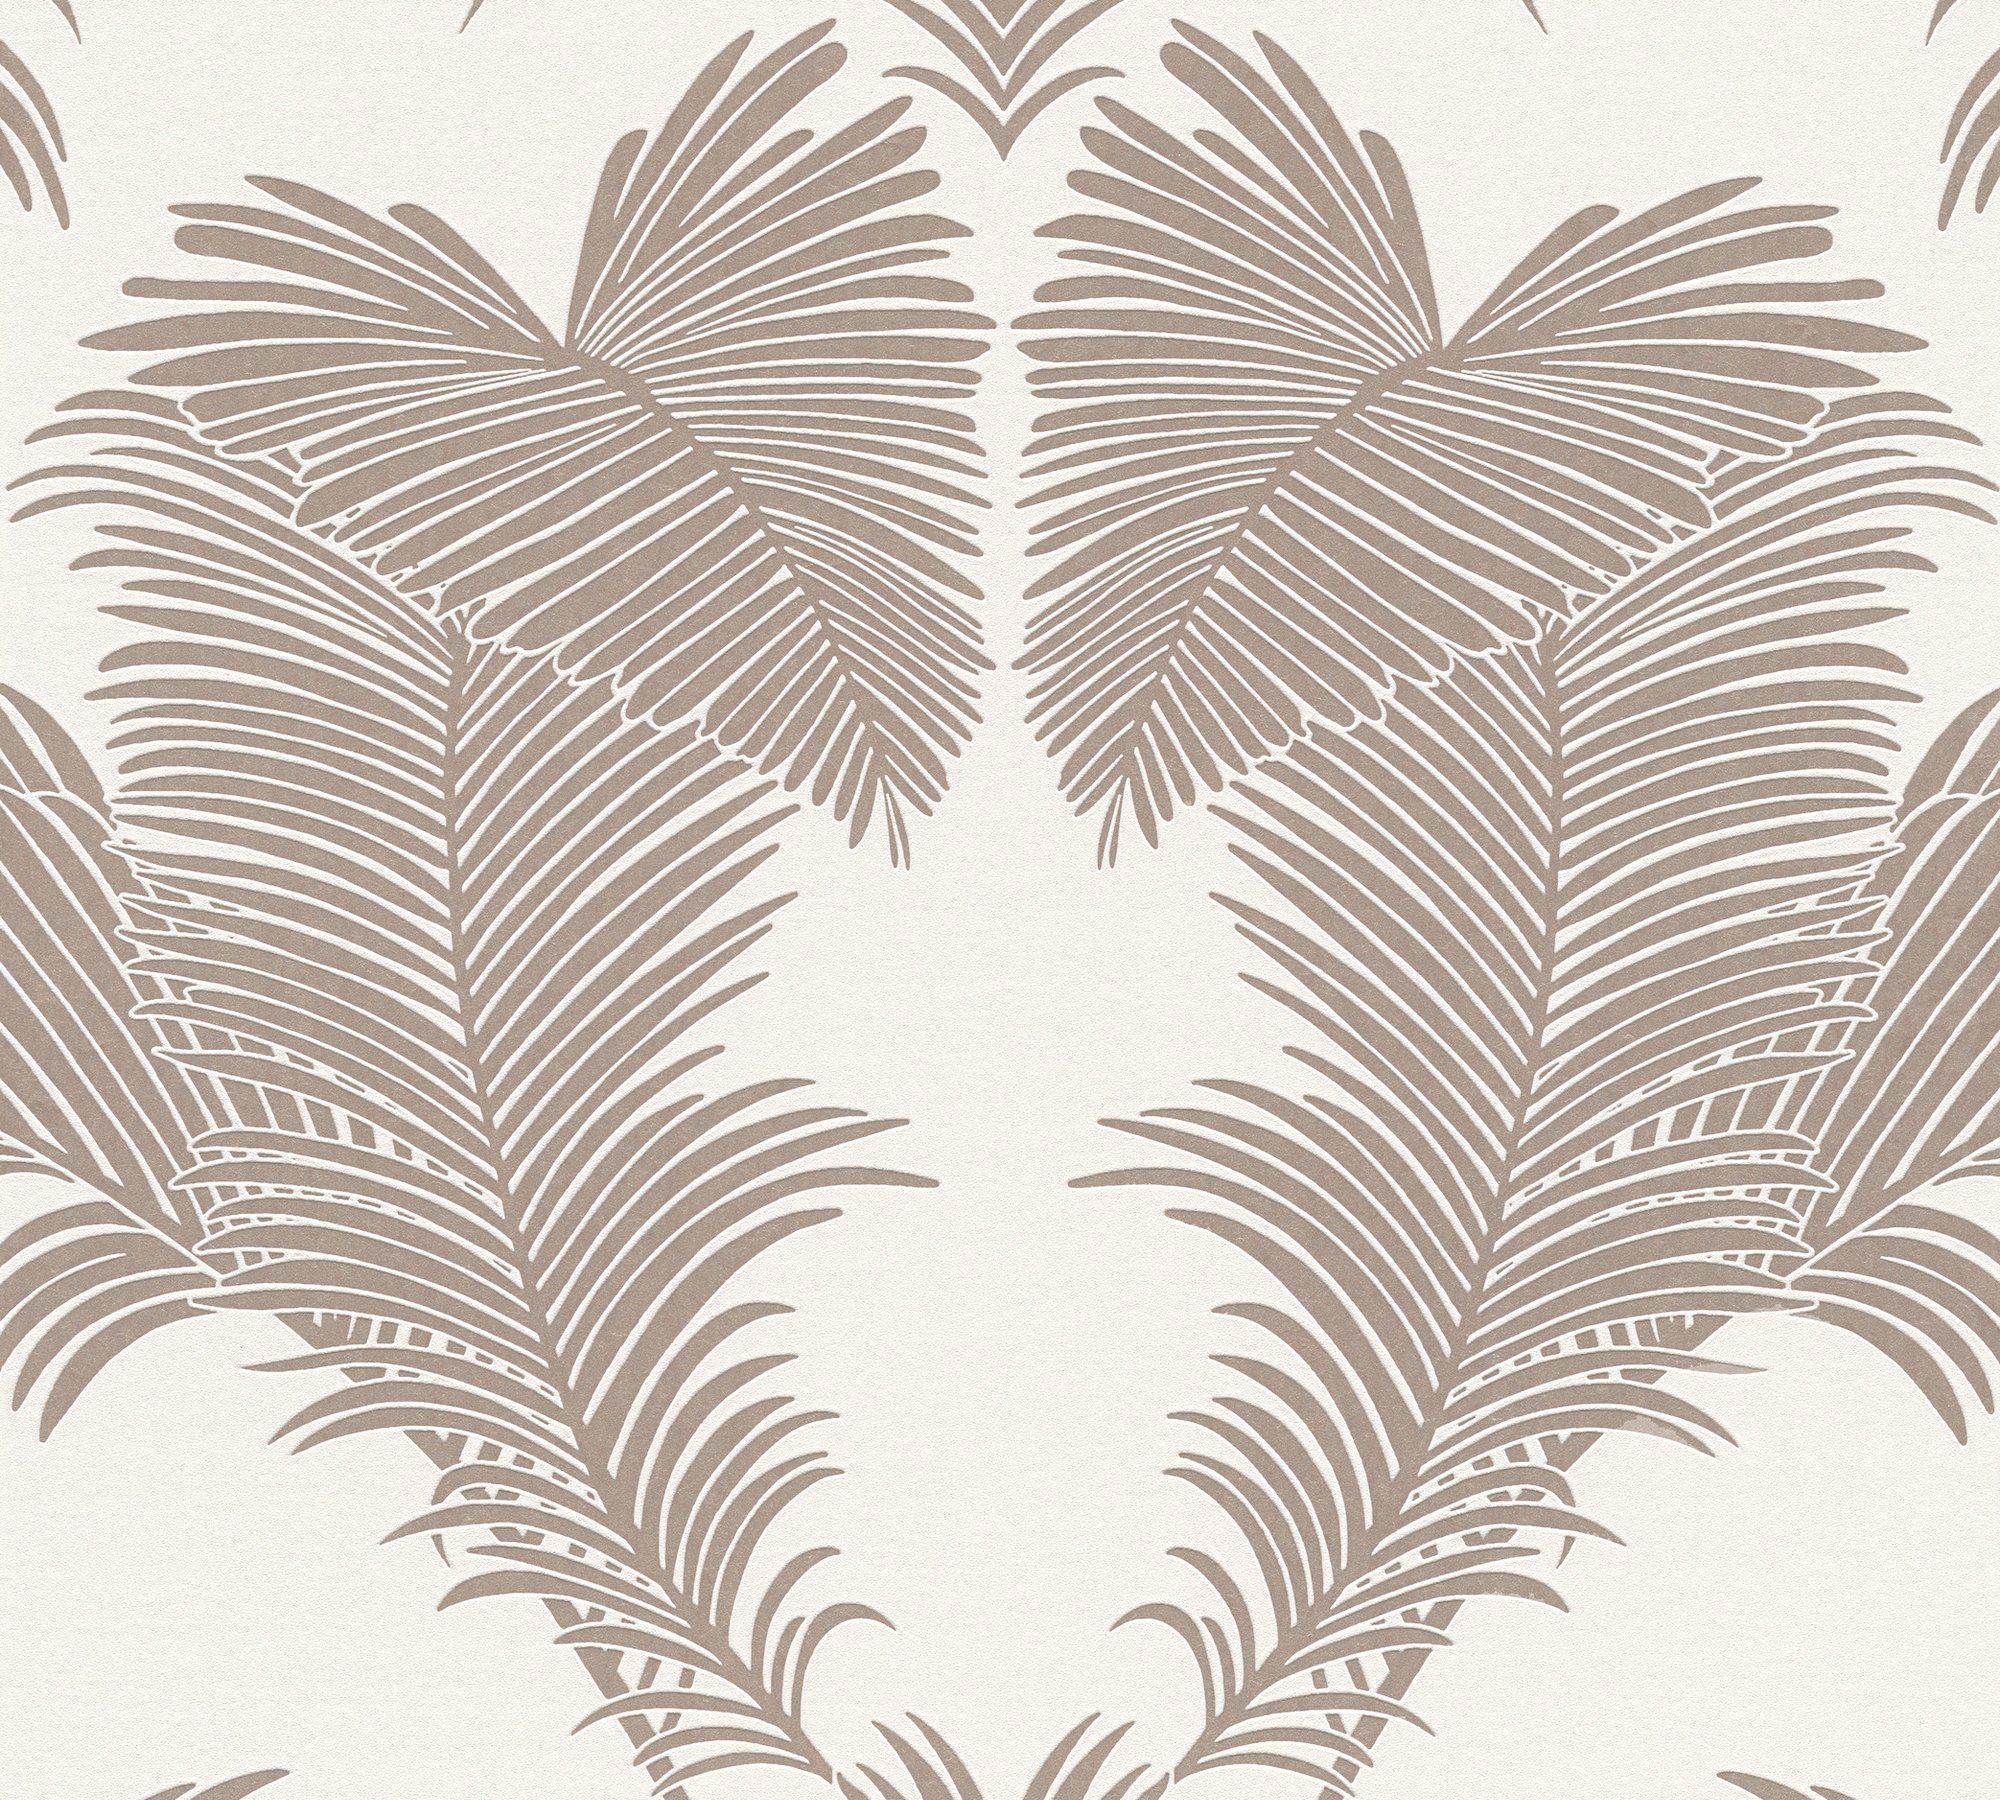 Vliestapete floral, Création Dschungeltapete tropisch, Glänzend A.S. botanisch, Trendwall, Tapete metallic/weiß Palmen